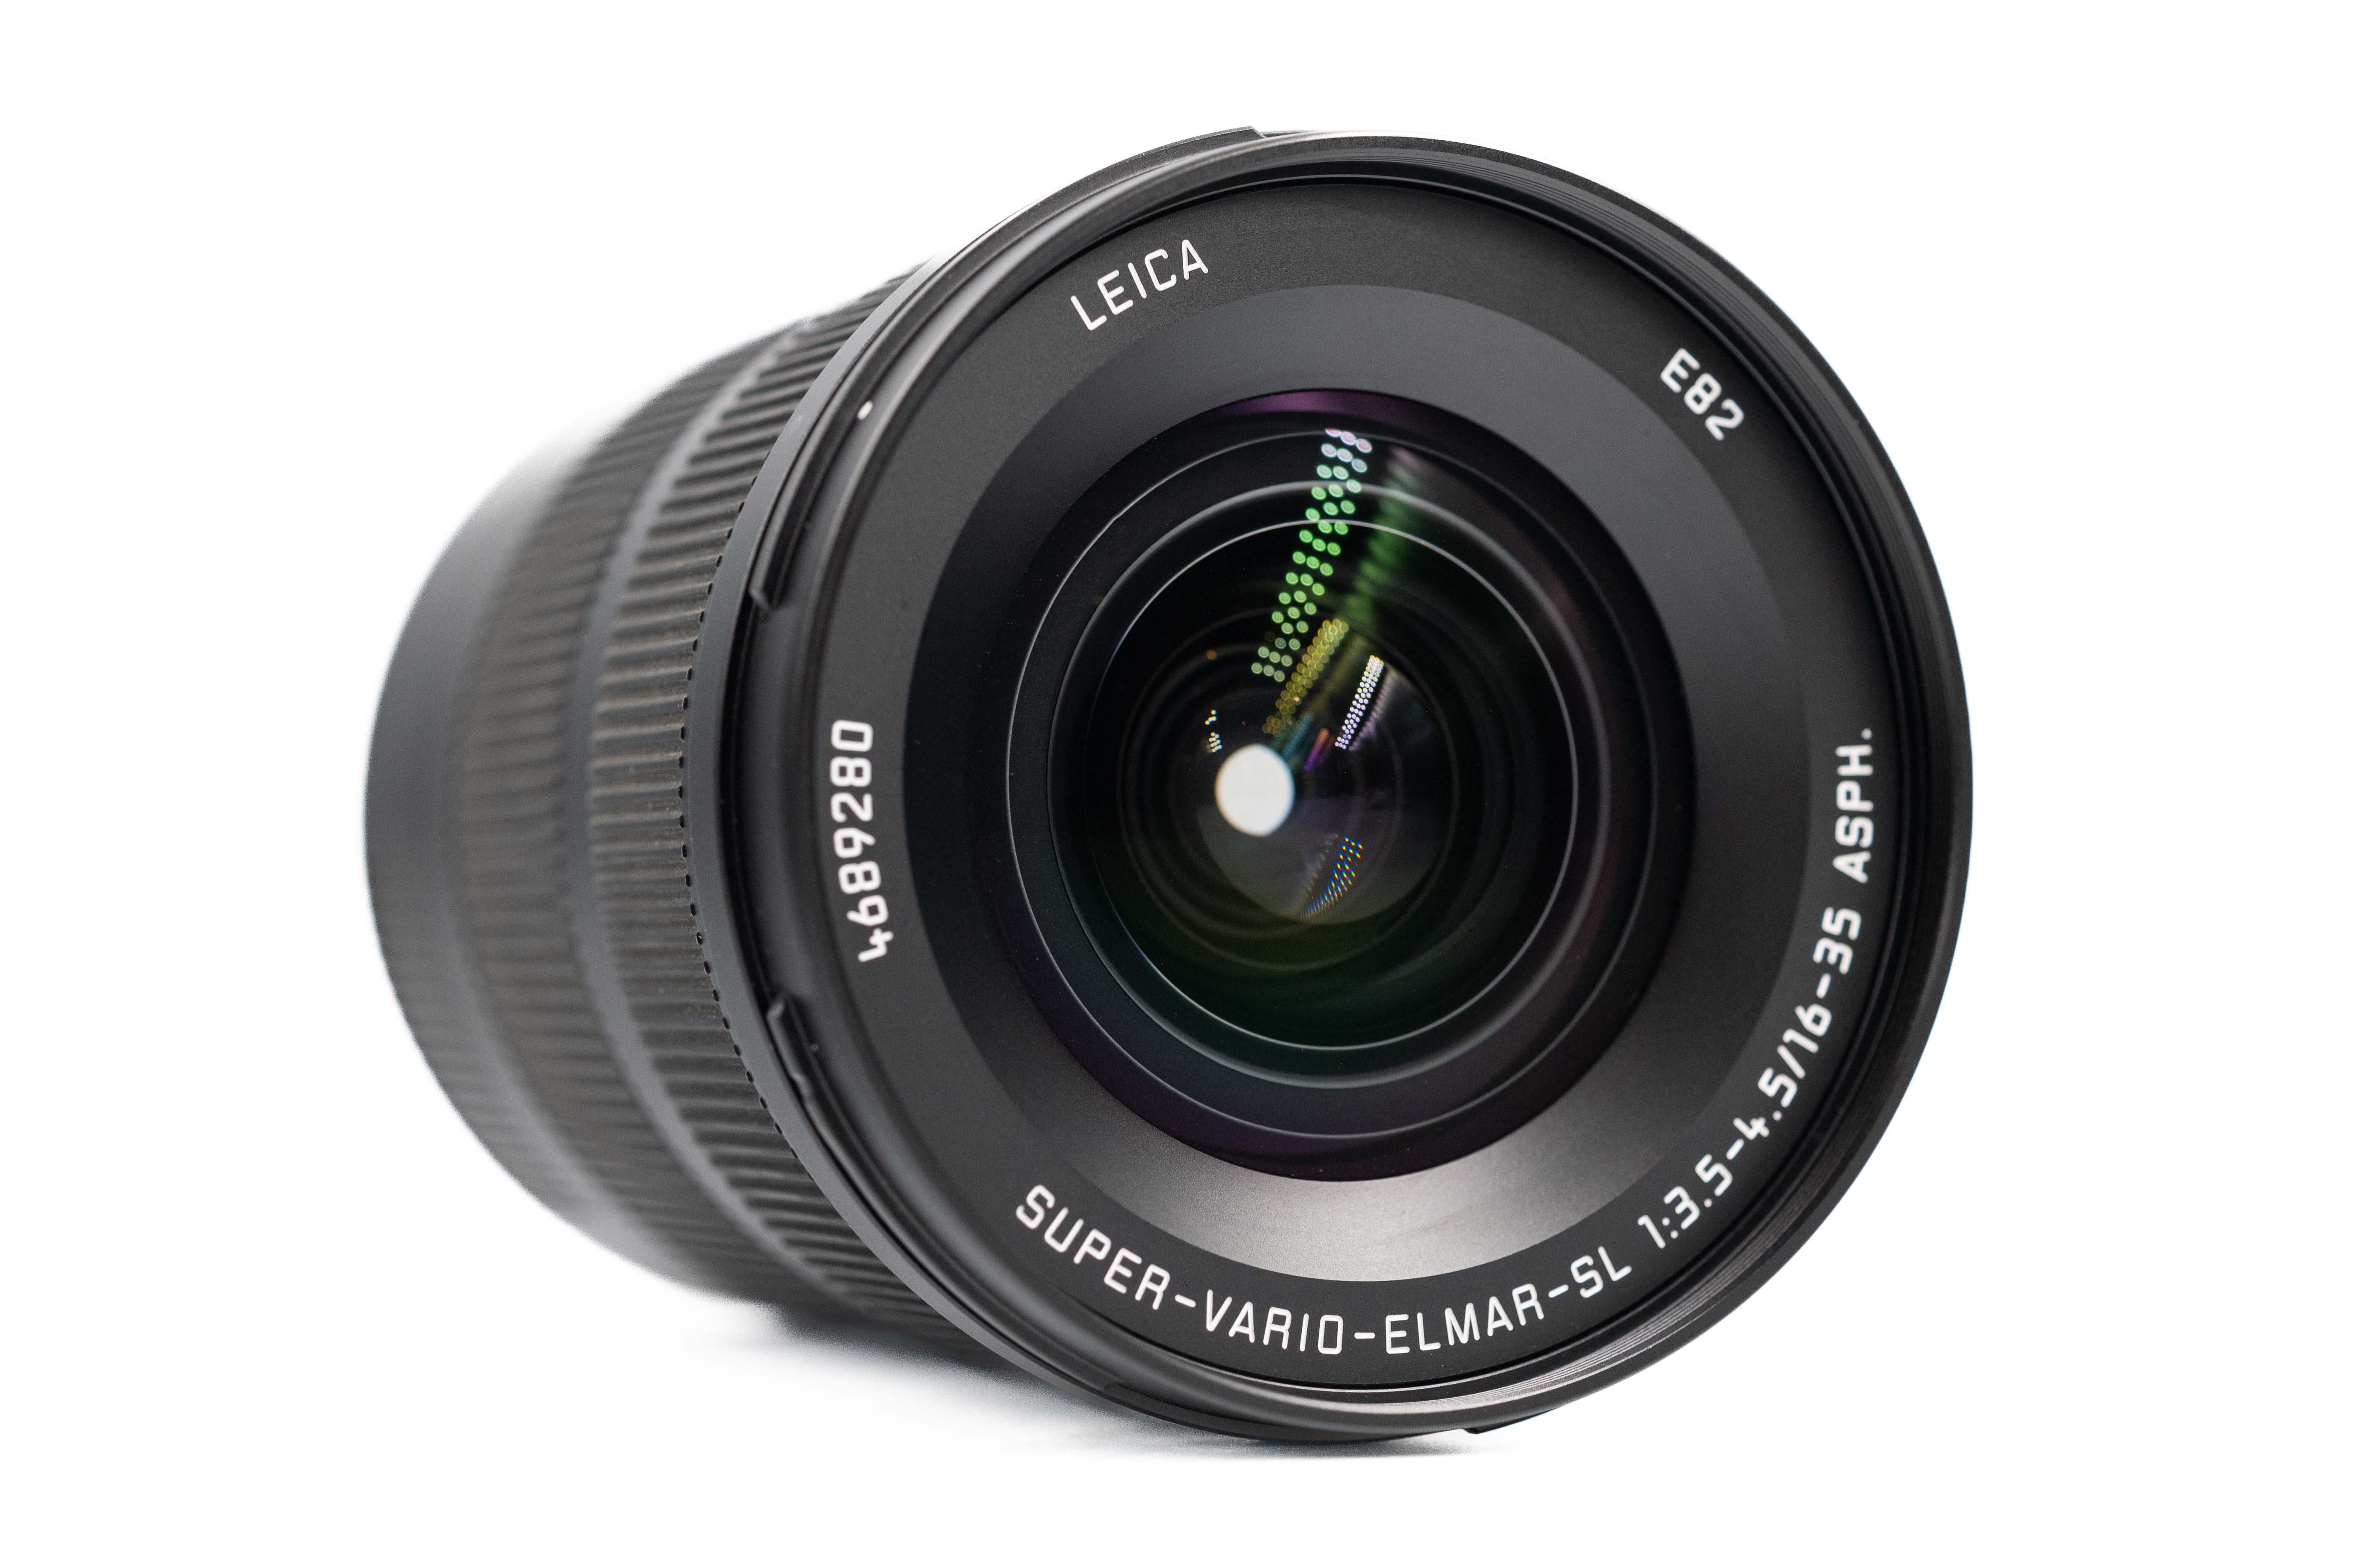 Leica Super-Vario-Elmar-SL 16-35mm f/3.5-4.5 11177